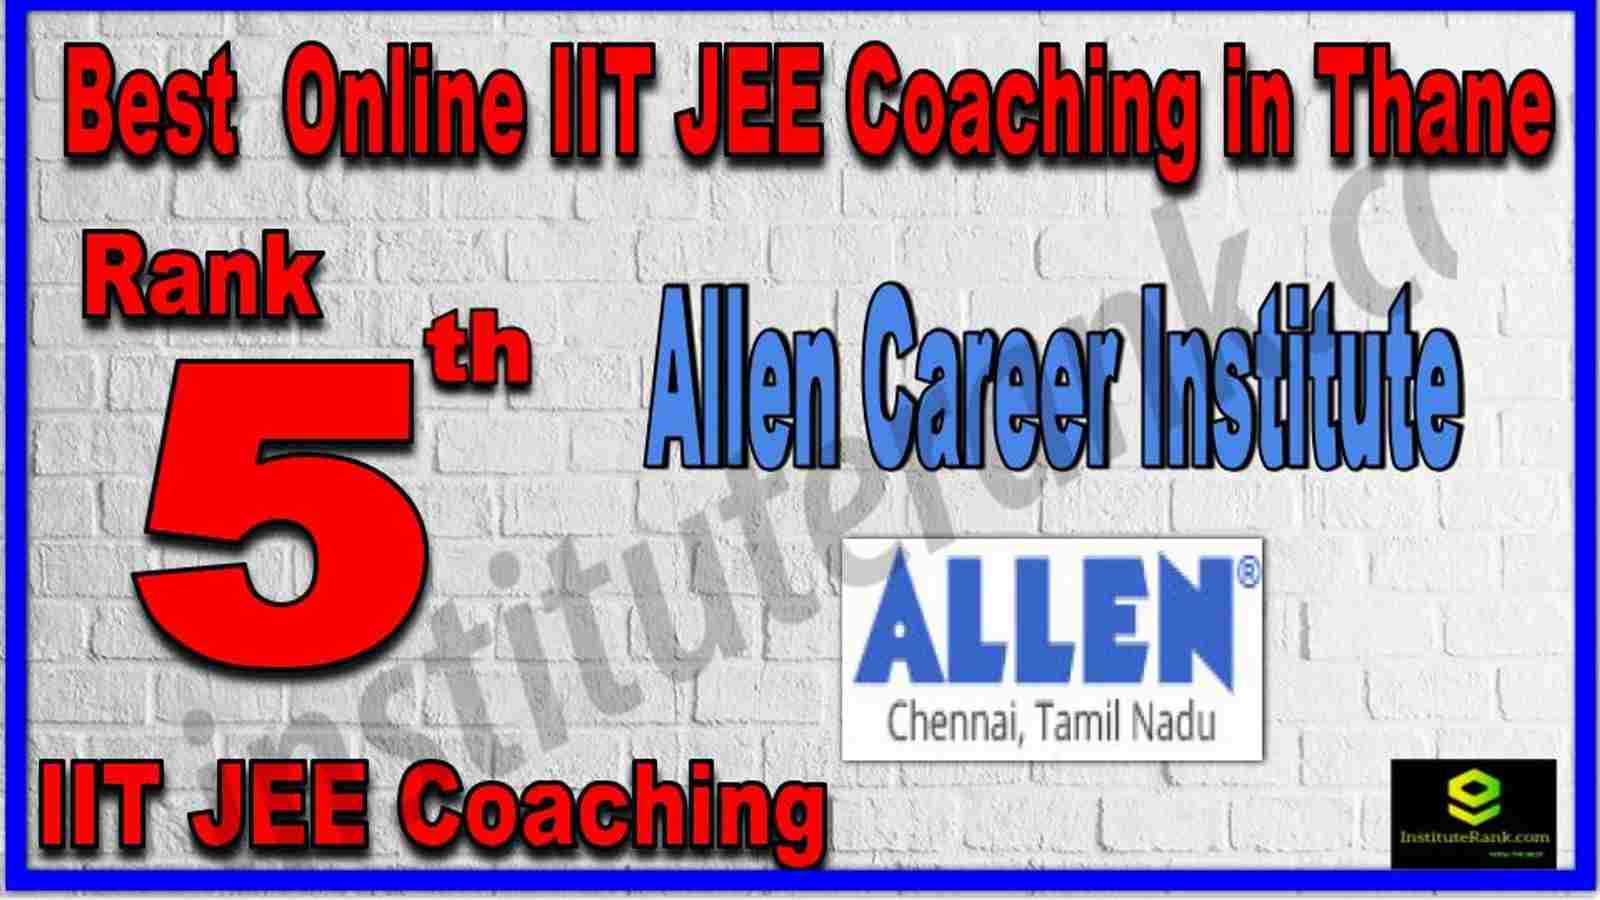 Rank 5th Best Online IIT JEE Coaching in Thane